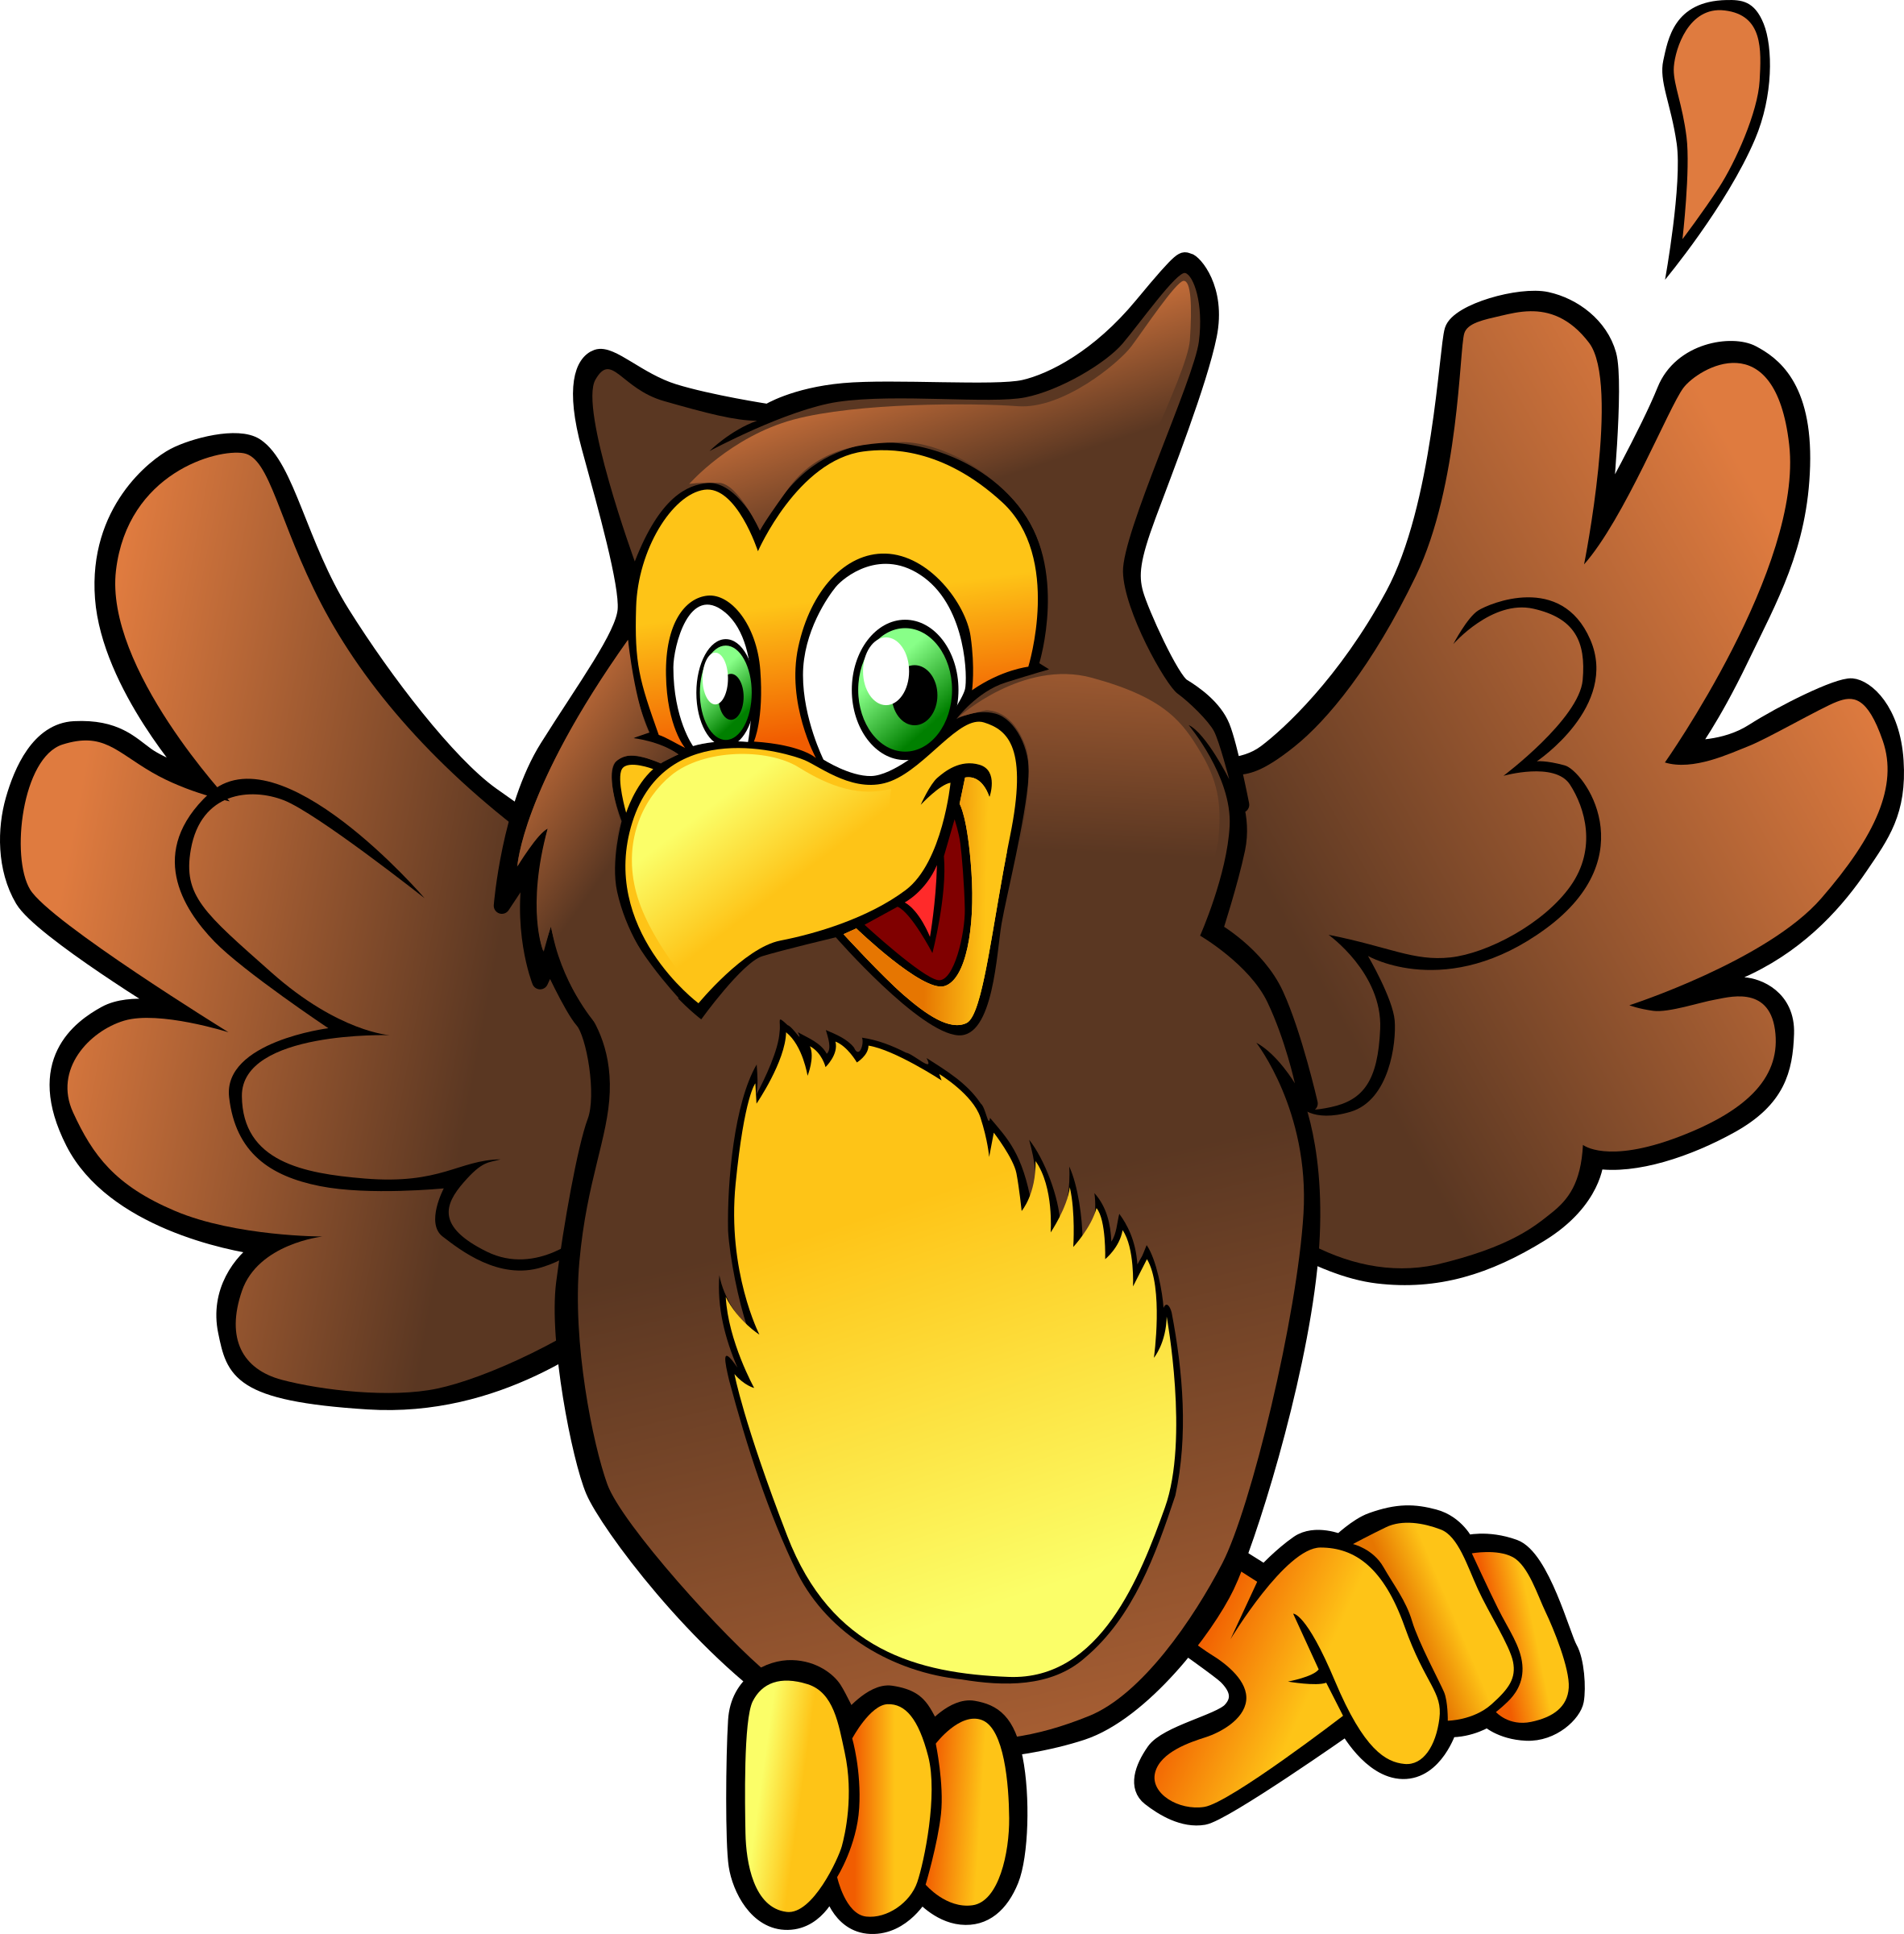 Happy Owl Vector Graphic - Free Public Domain Stock Photo